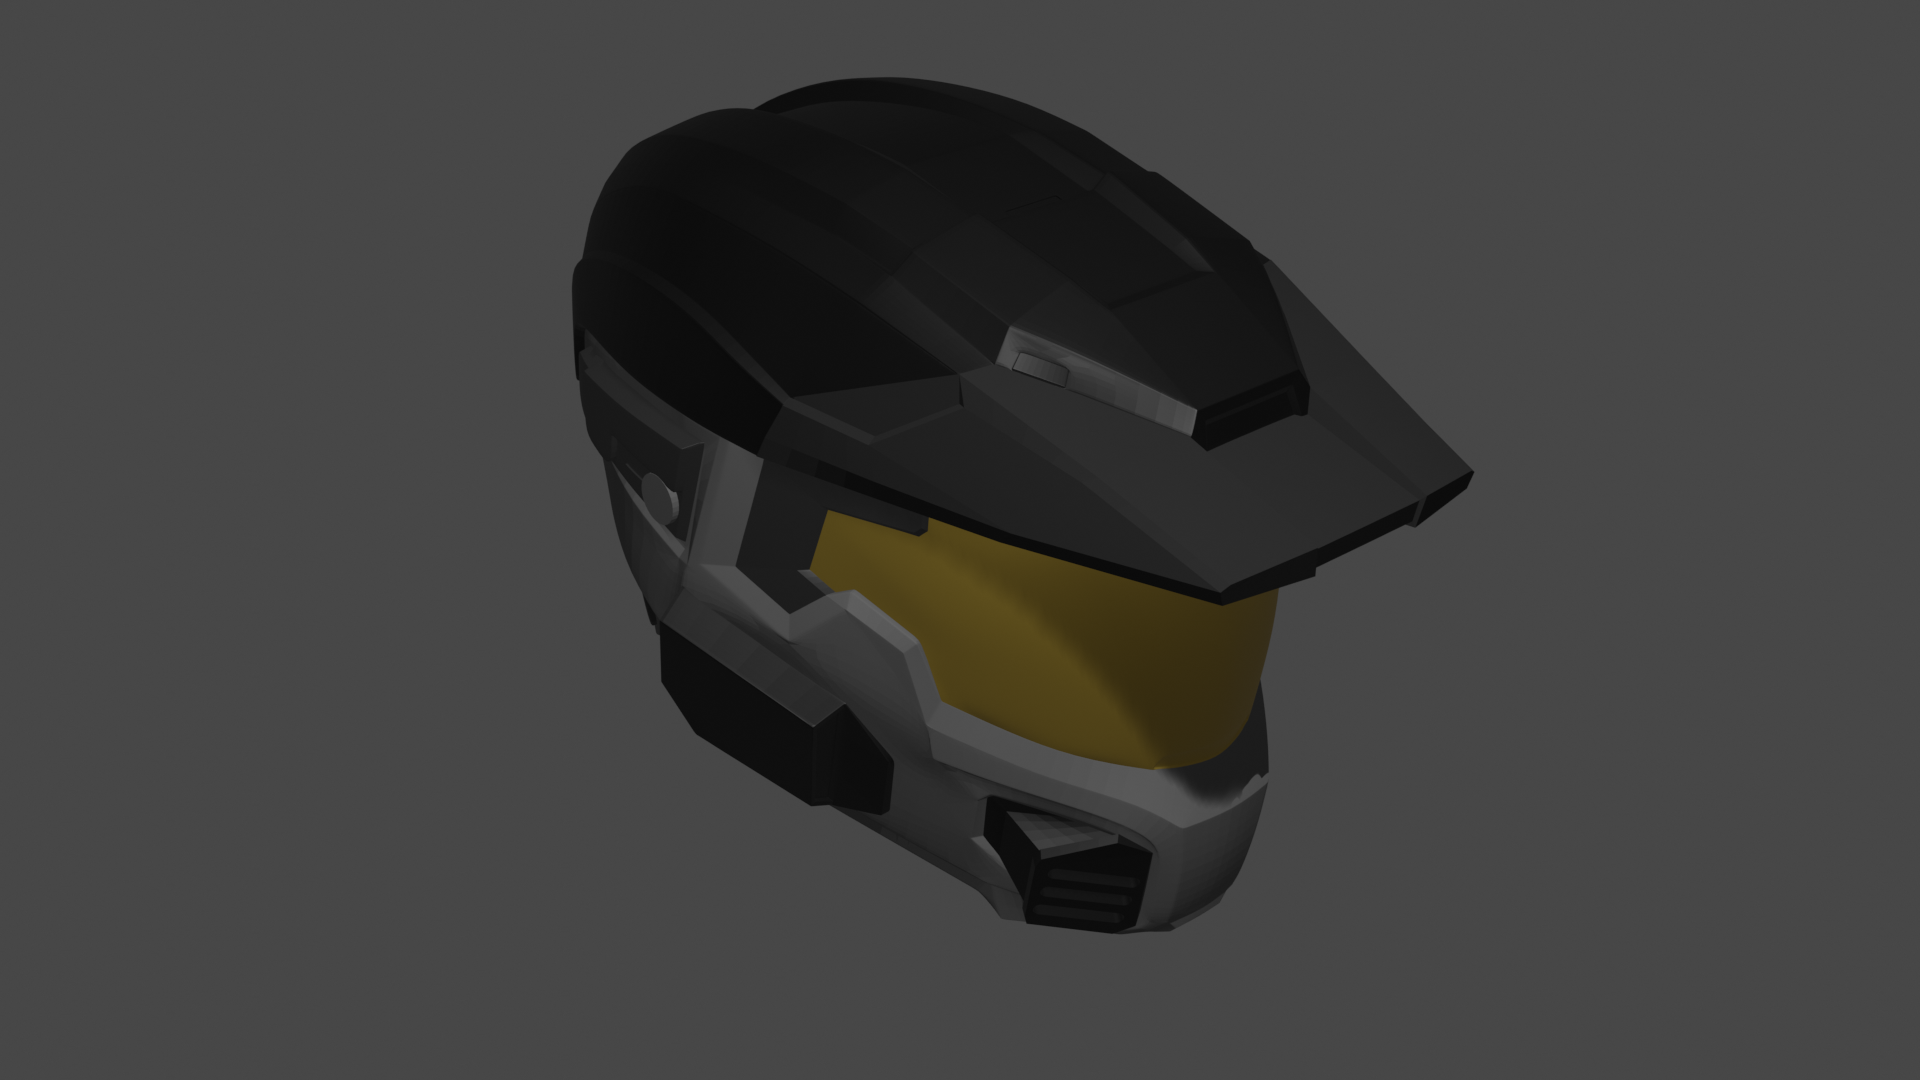 helmet.png